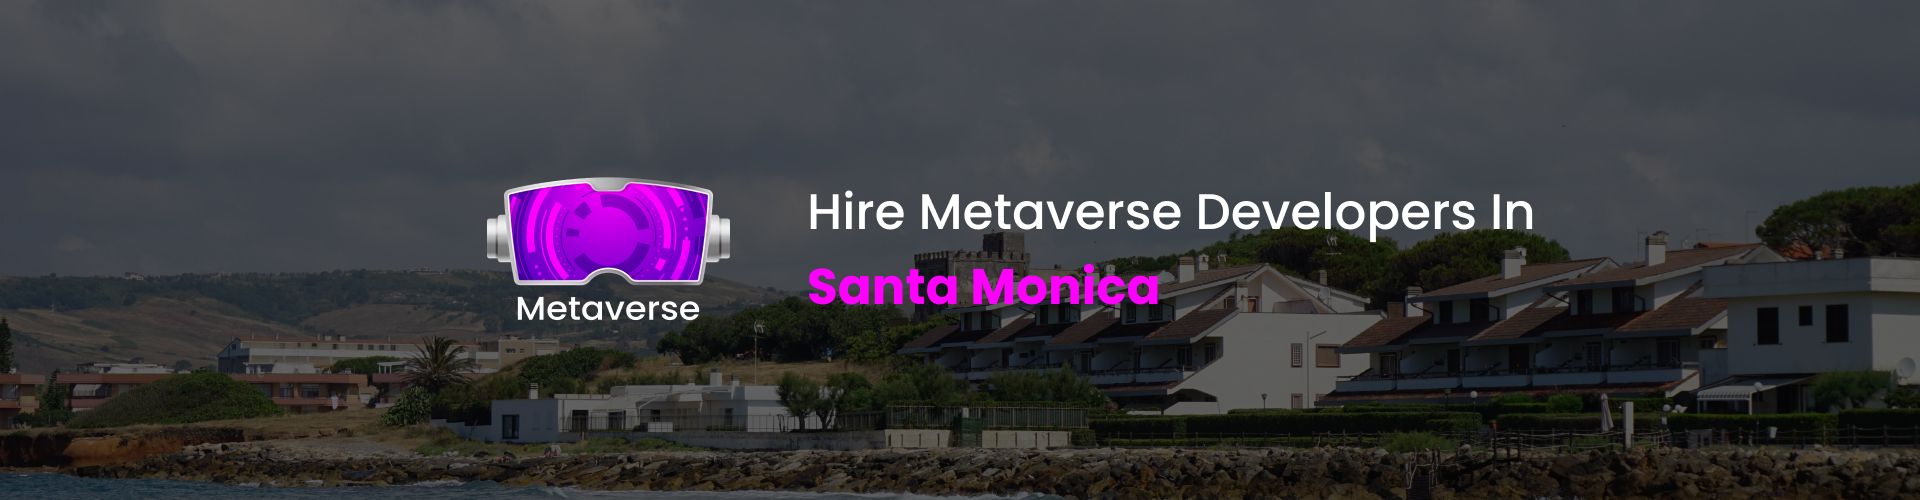 hire metaverse developers in santa monica